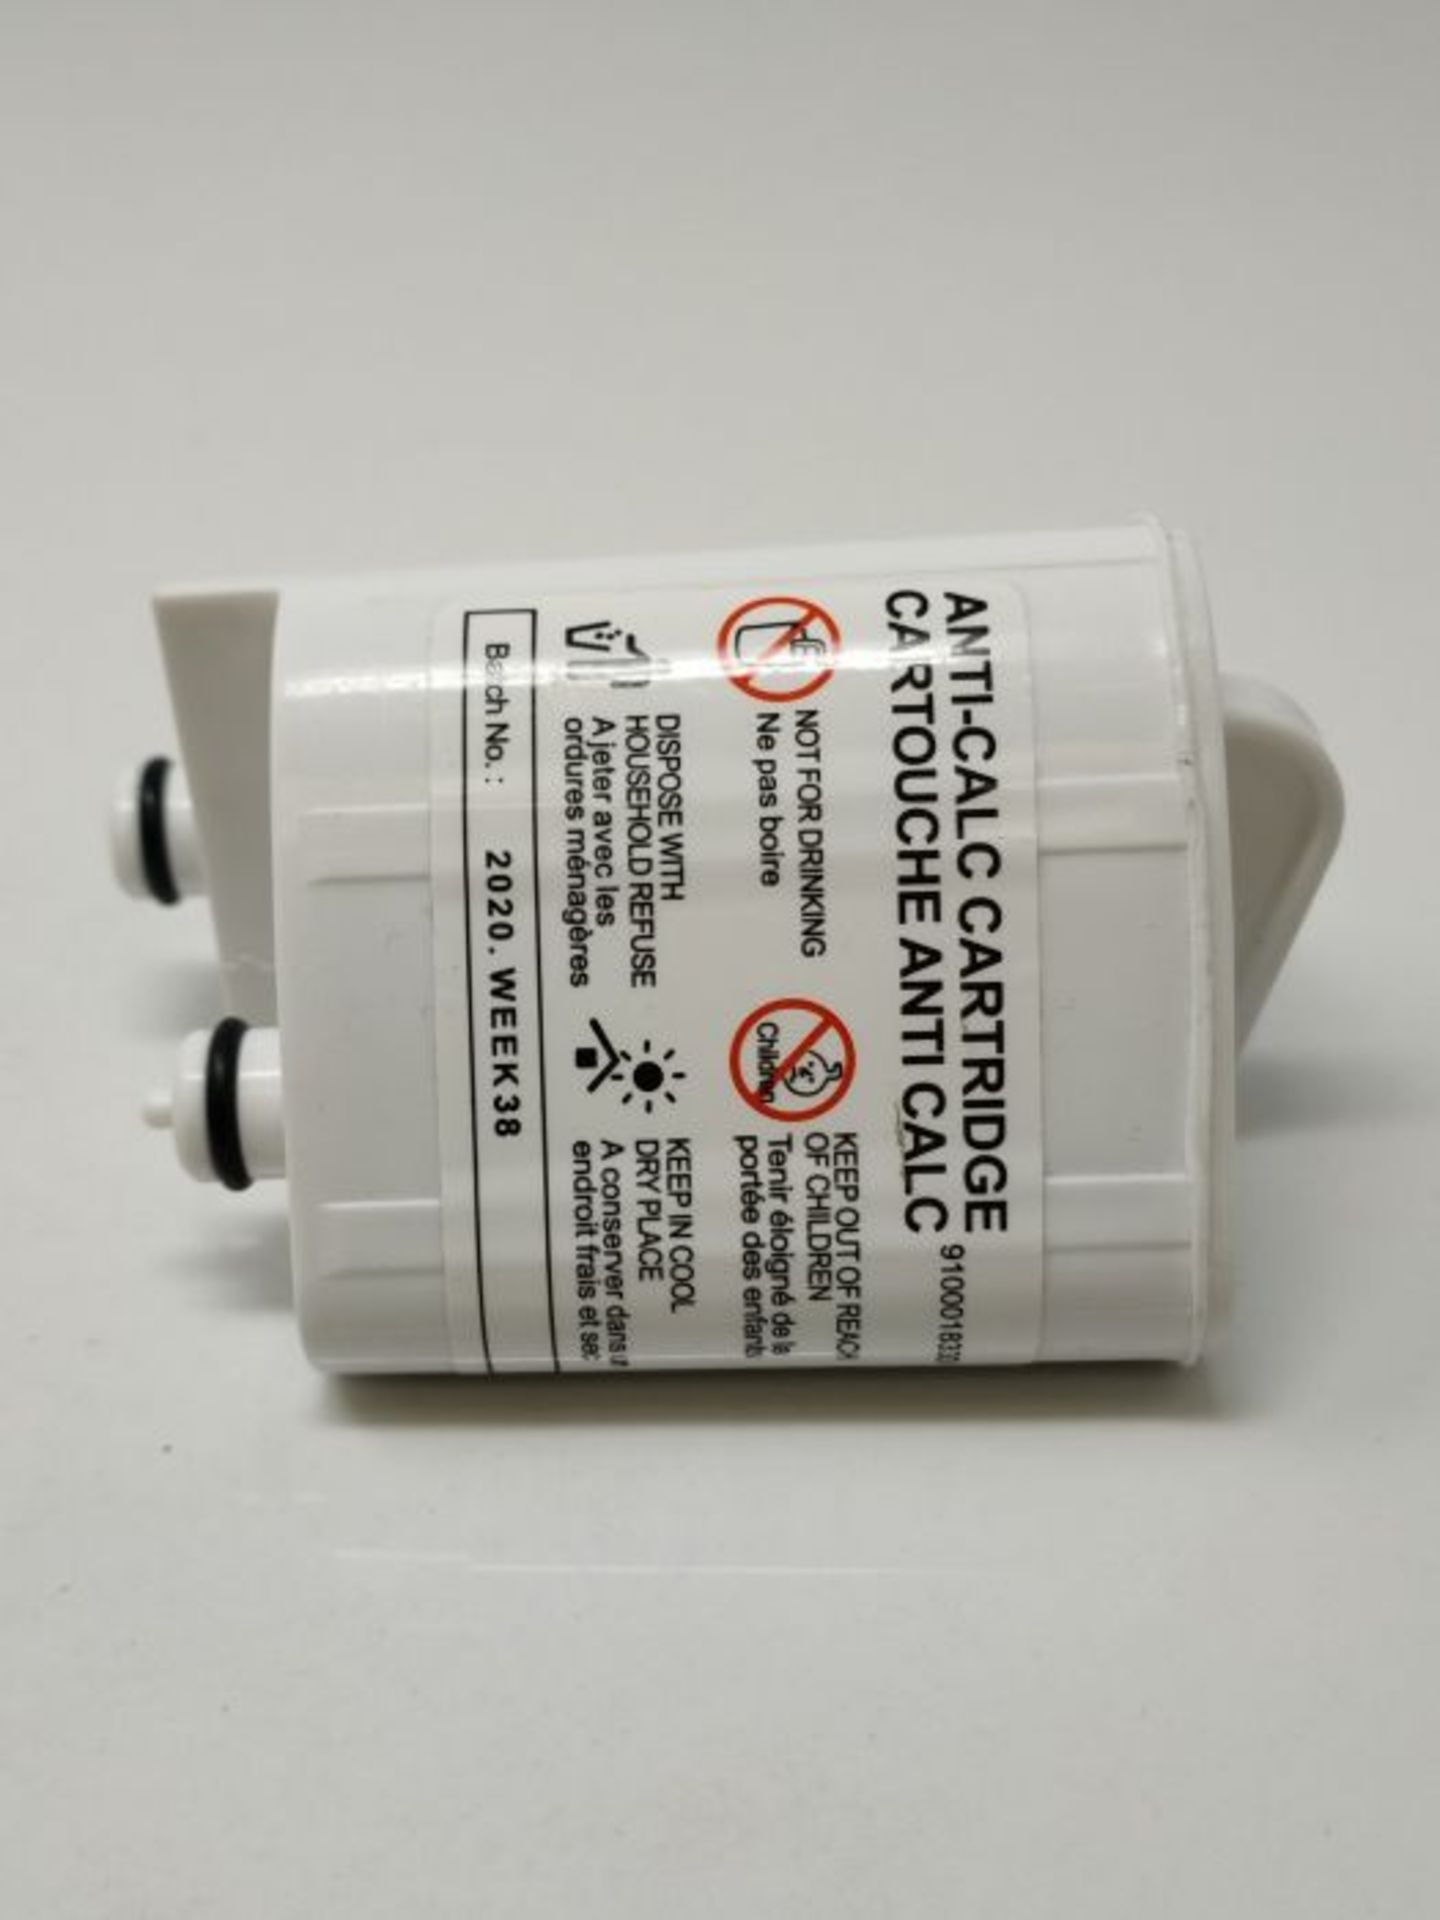 Tefal Moulinex xd9030e0 anti-limescale cartridge, - Image 3 of 3